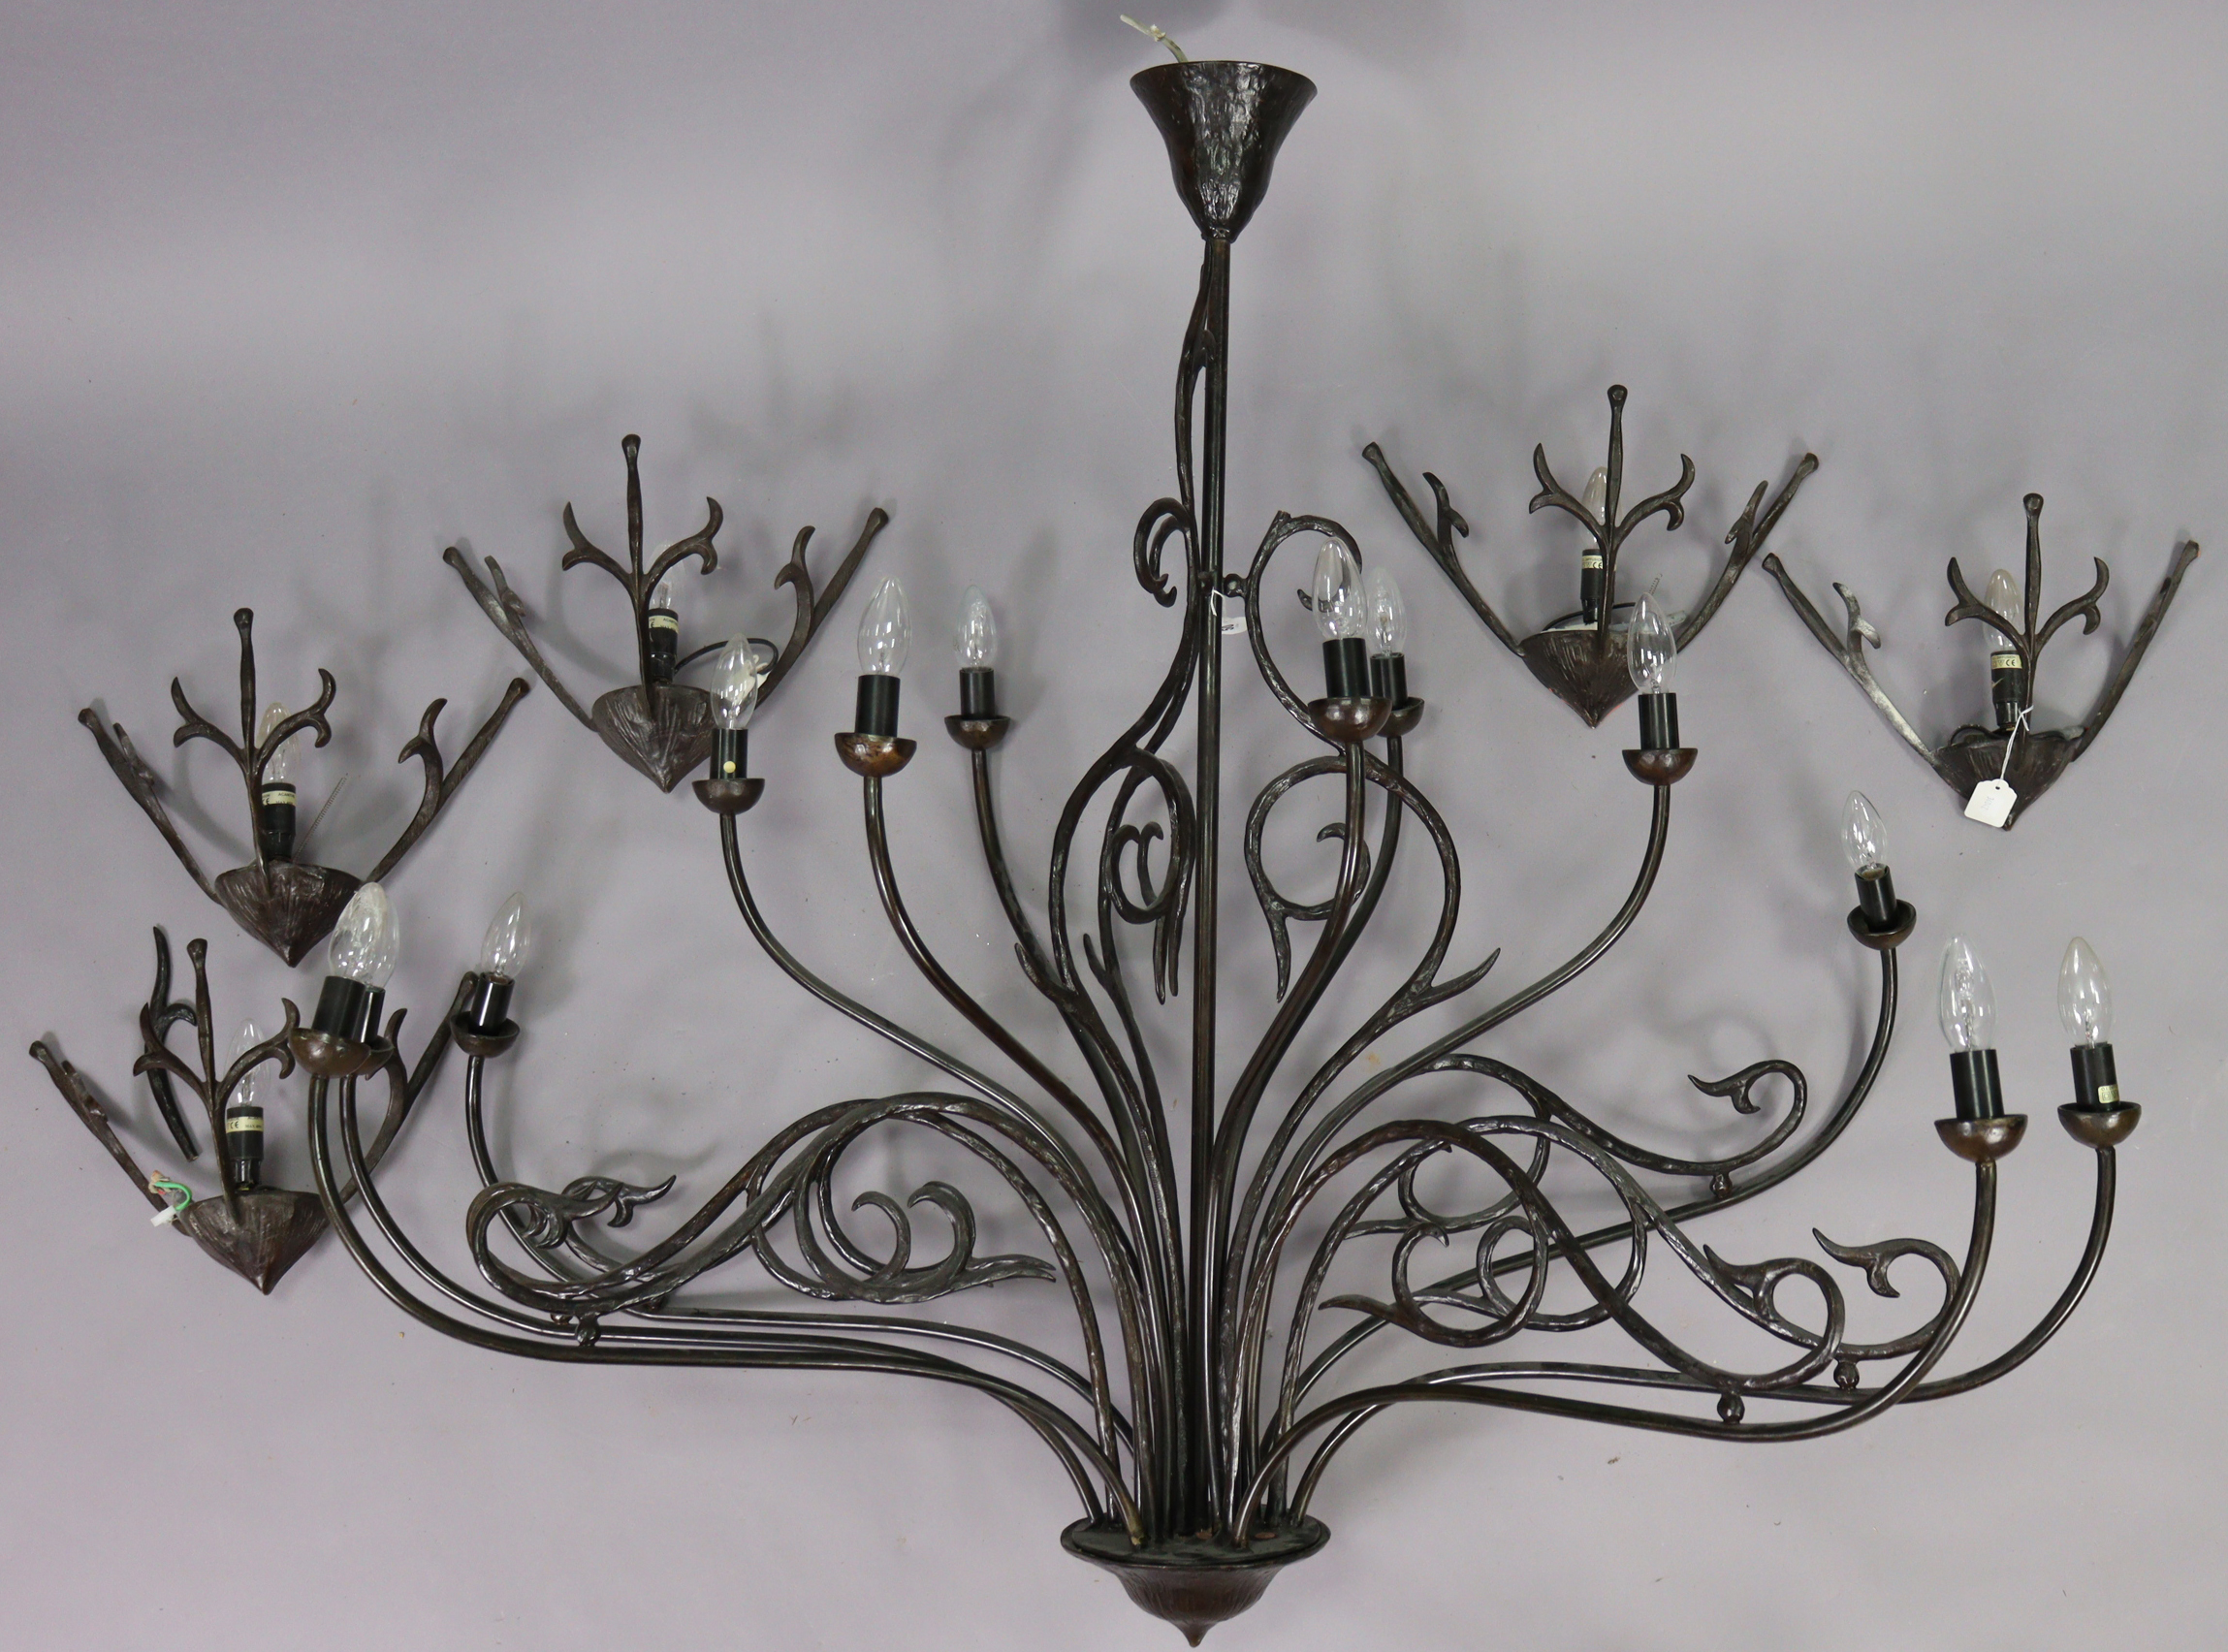 A black wrought-metal twelve-branch chandelier, 49” wide x 45” high; & a matching set of five wall